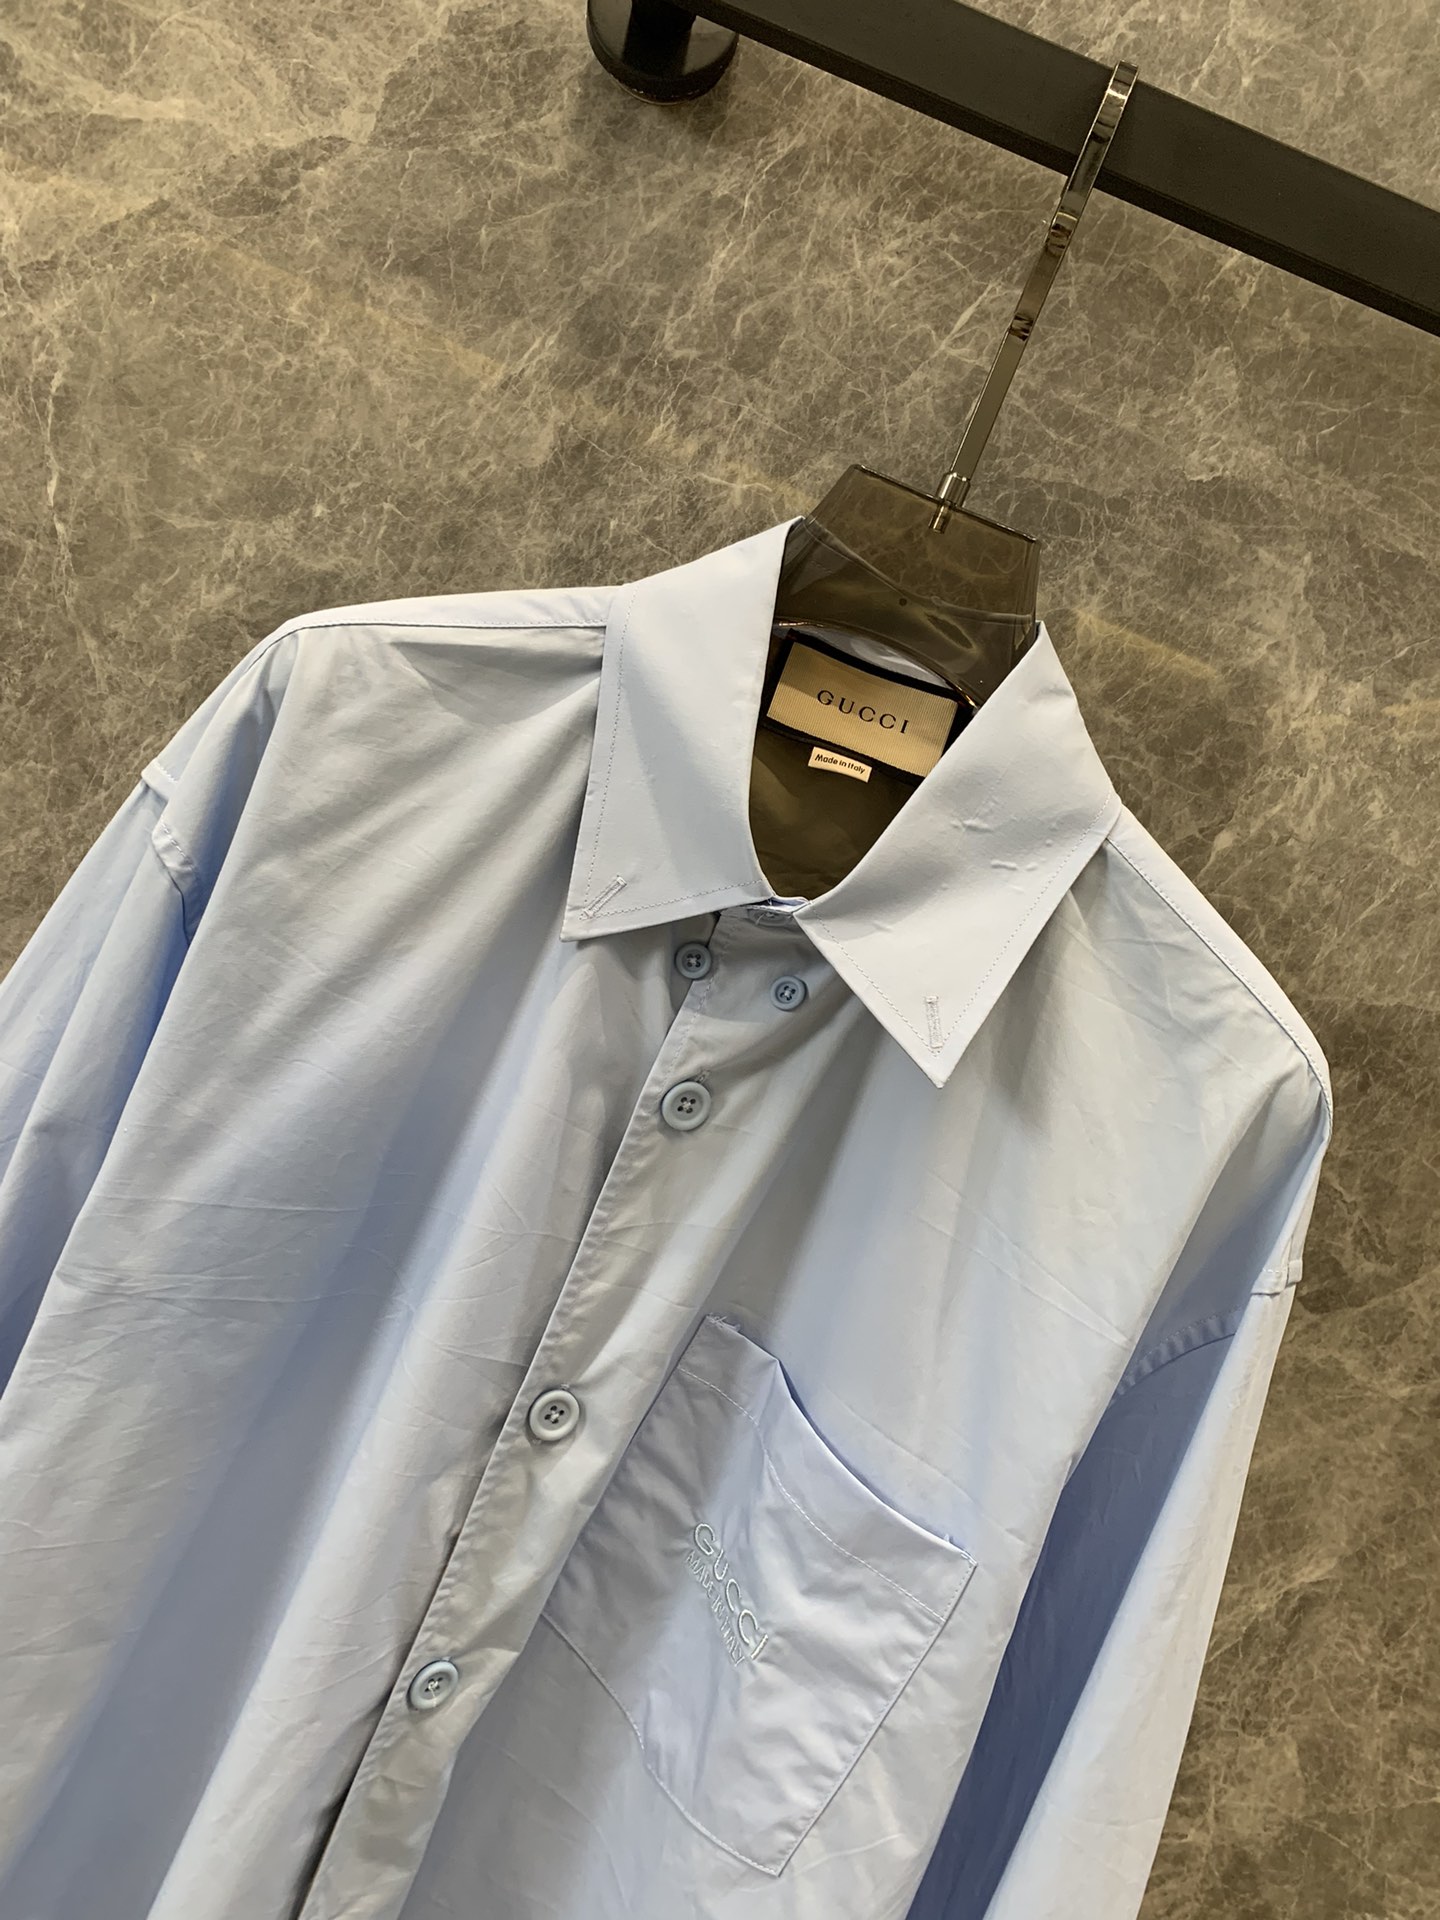 Gucc*24Ss夏季新款微标刺绣翻领长袖衬衫采用定制棉质面料柔和米色与活力色调融为一体迎接新一季的到来